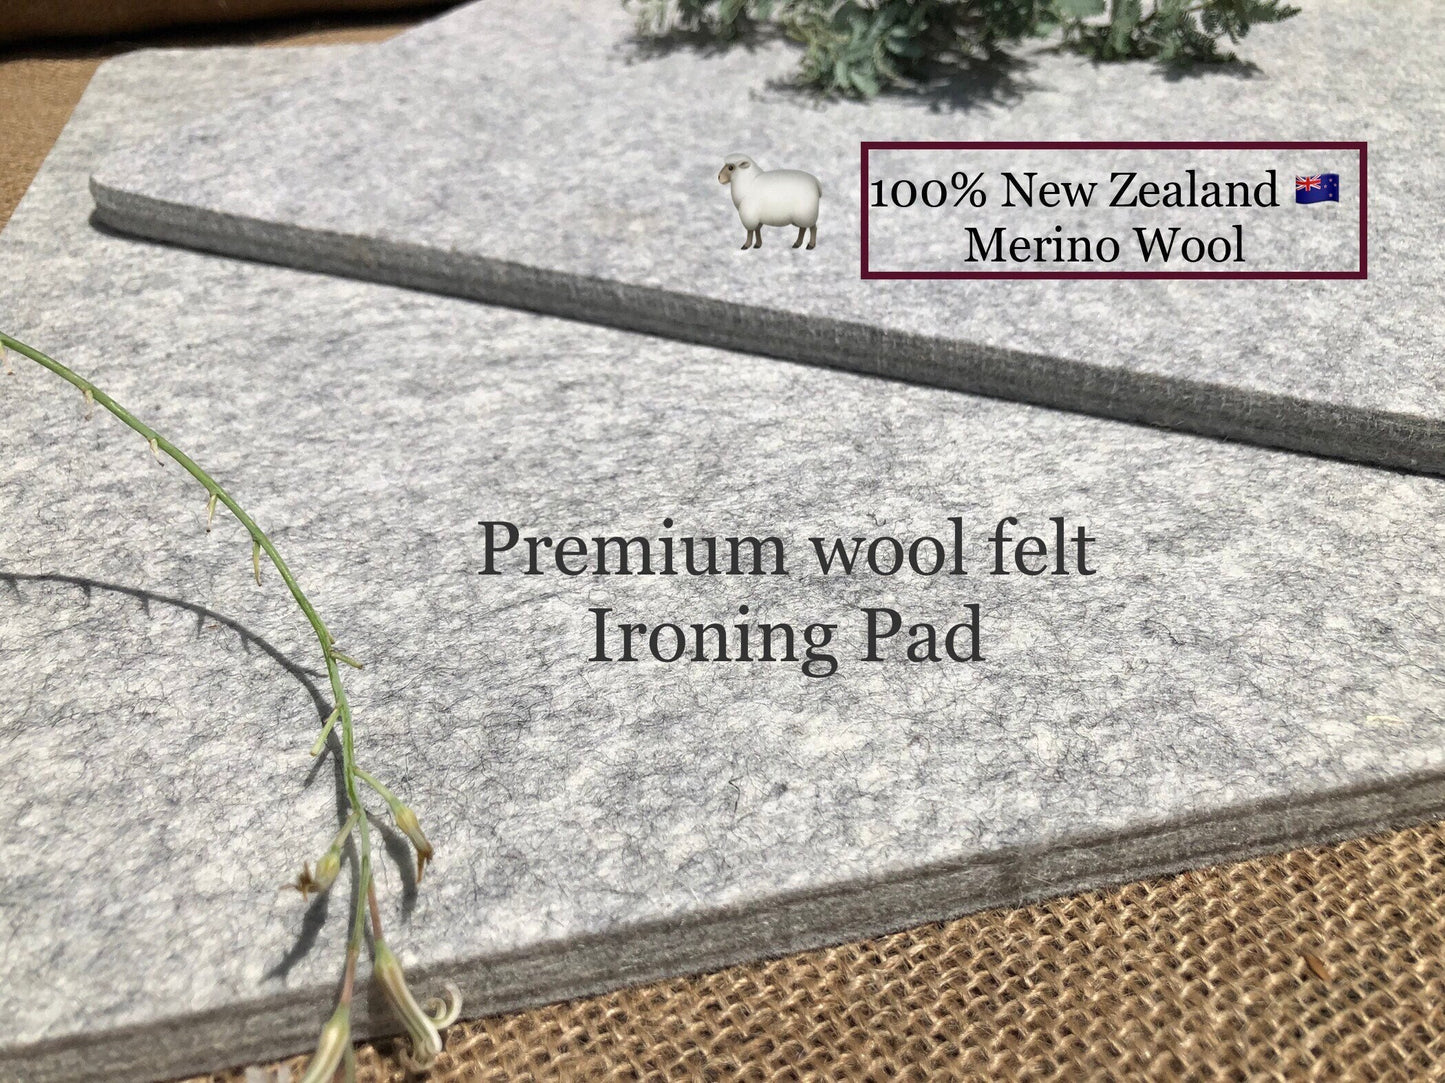 Premium wool felt ironing pad, 100% New Zealand merino wool, pressing mat, portable ironing board, wool ironing mat, sewing quilting tool